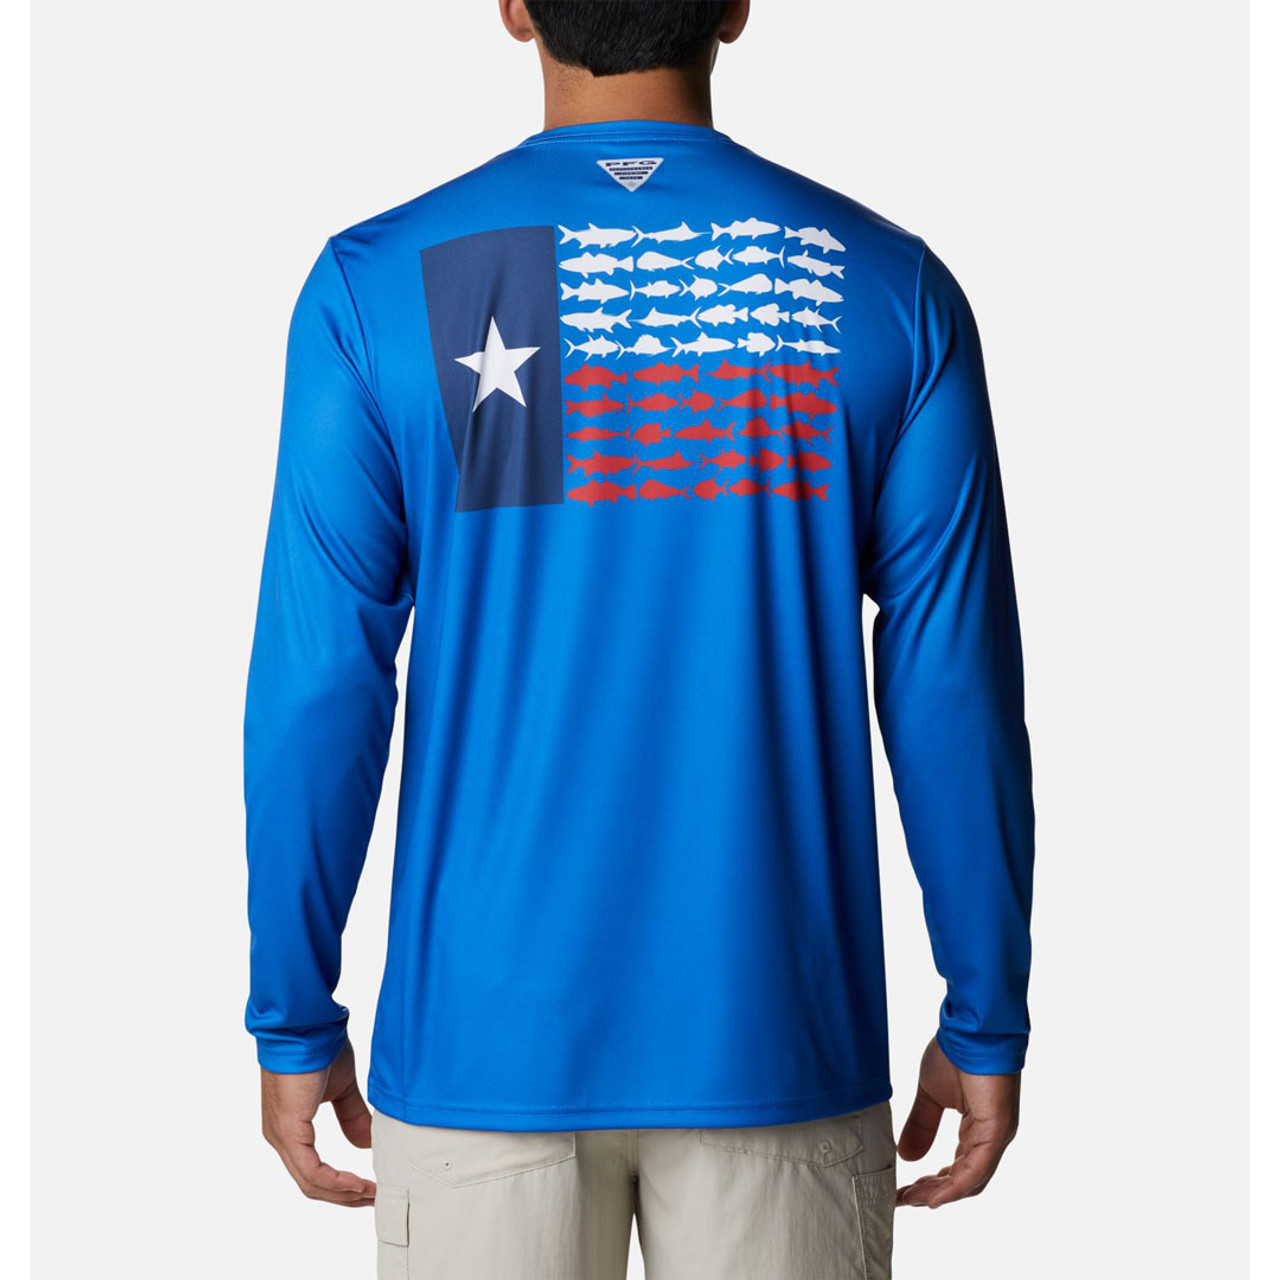 Columbia Men's Terminal Tackle PFG Fish Flag Long Sleeve Shirt $ 40